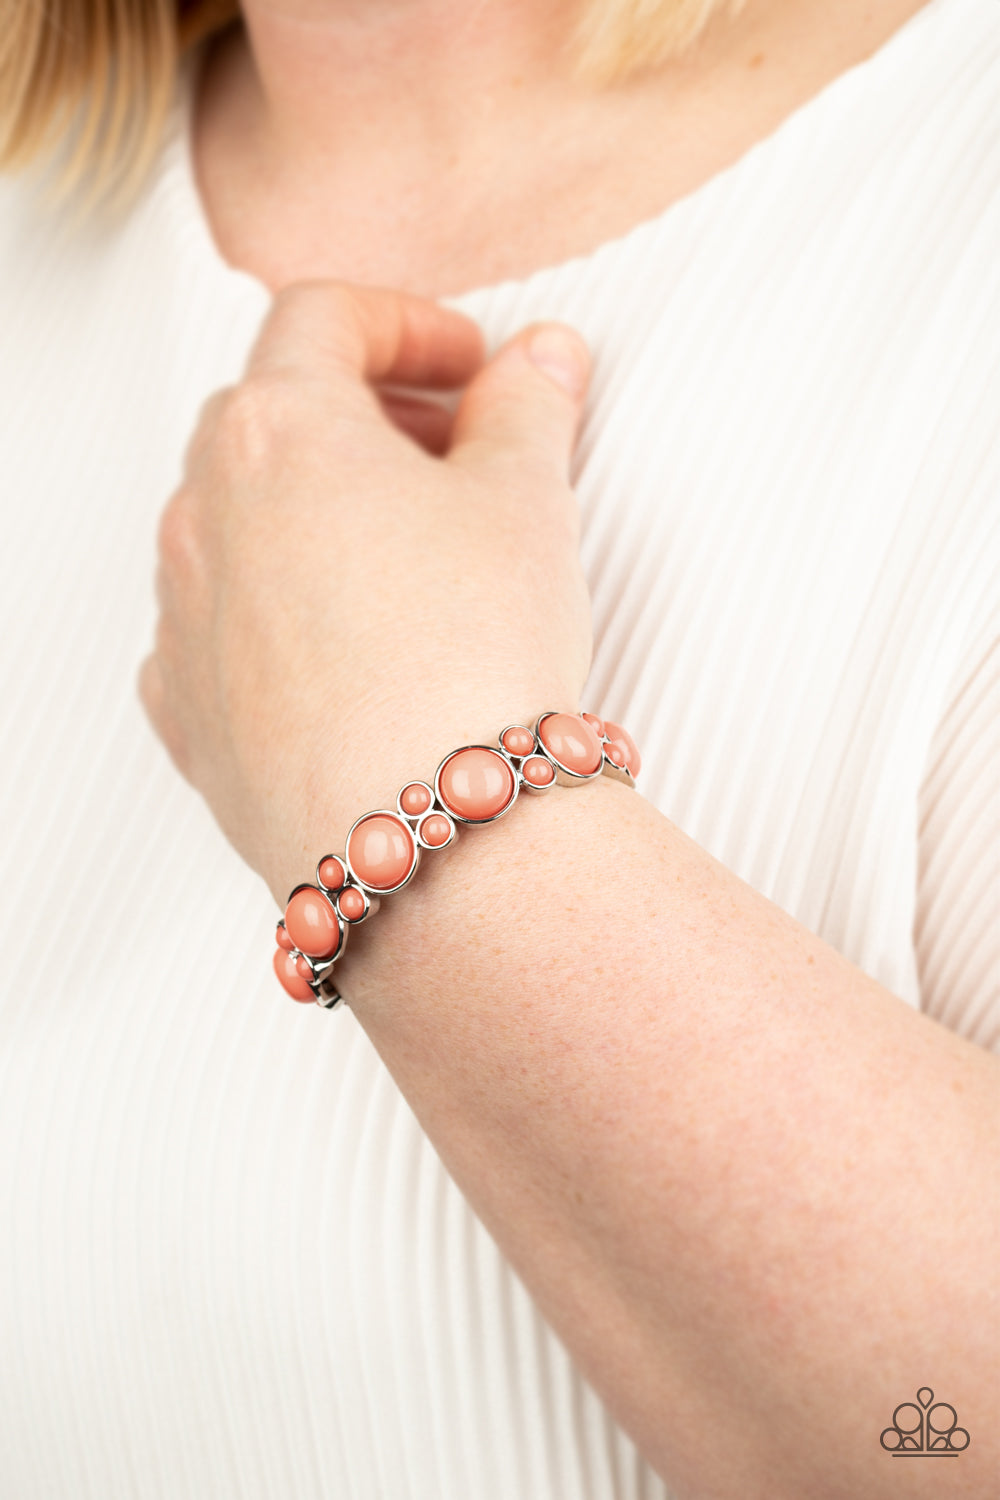 Paparazzi Bubbly Belle - Orange / Coral Beads - Stretchy Band - Bracelet - $5 Jewelry with Ashley Swint